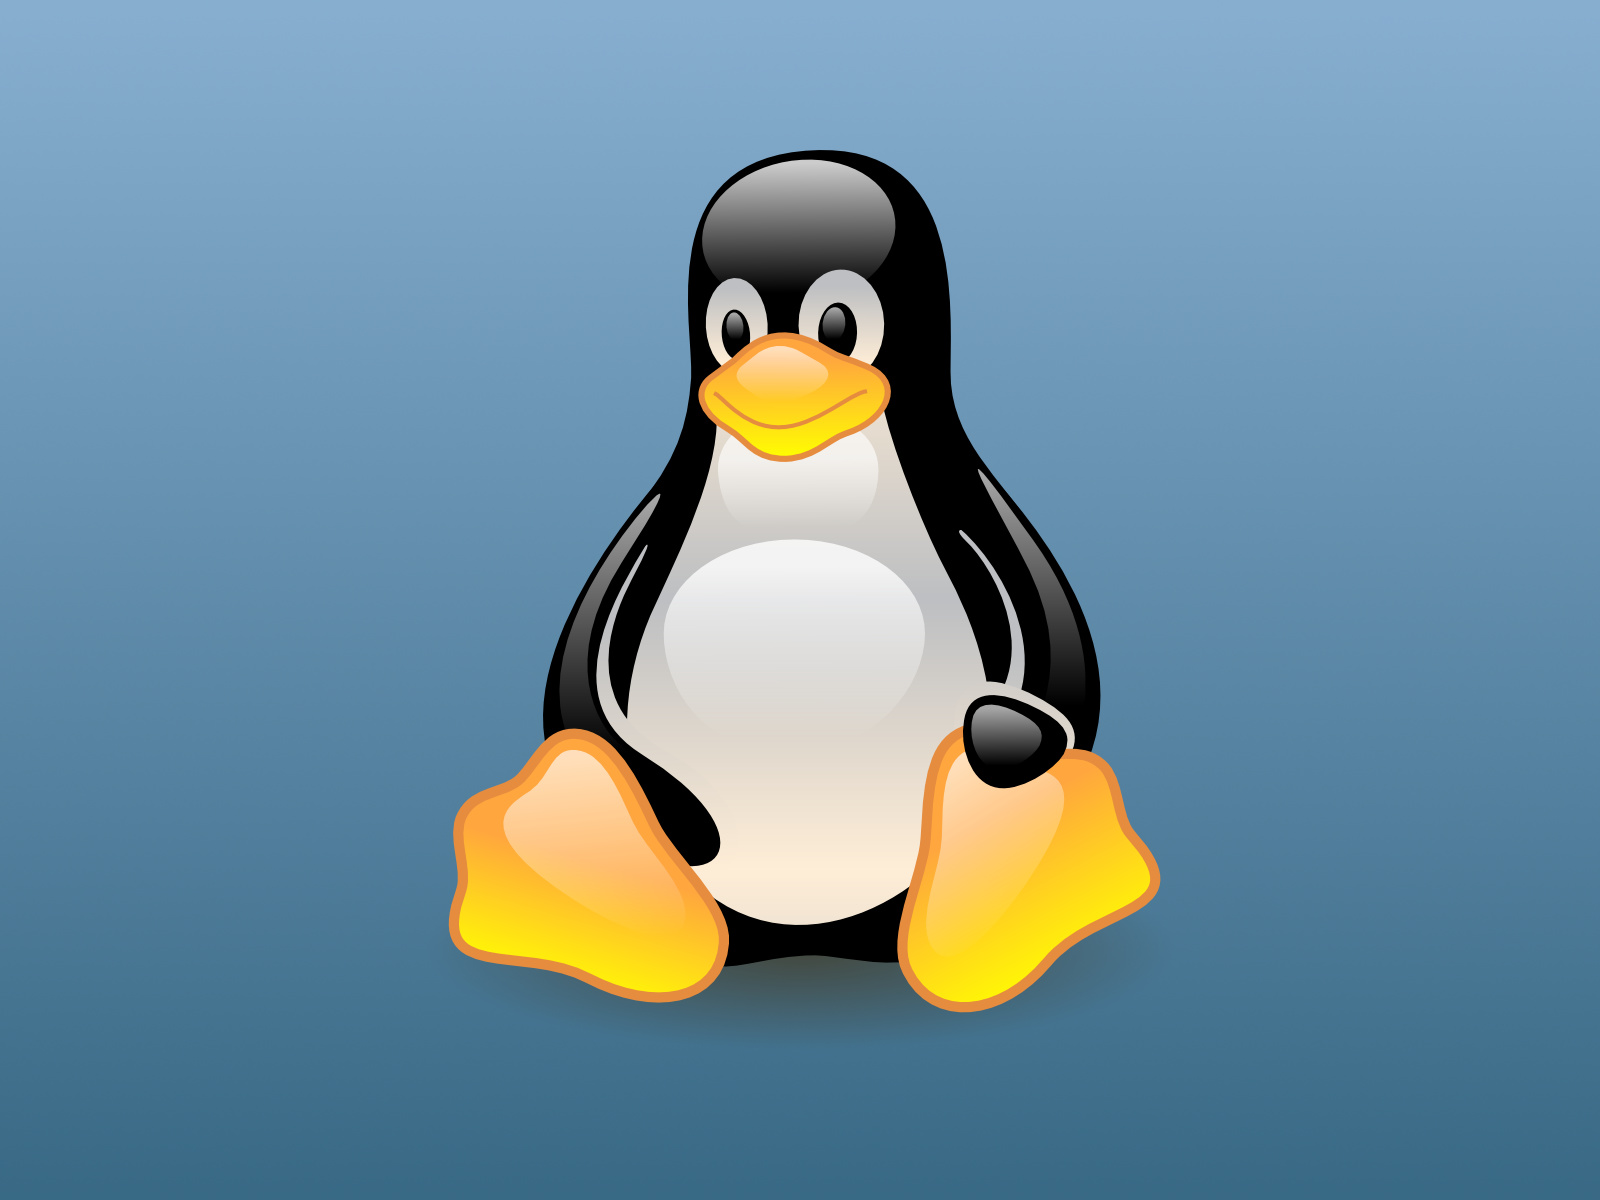 Линукс картинки